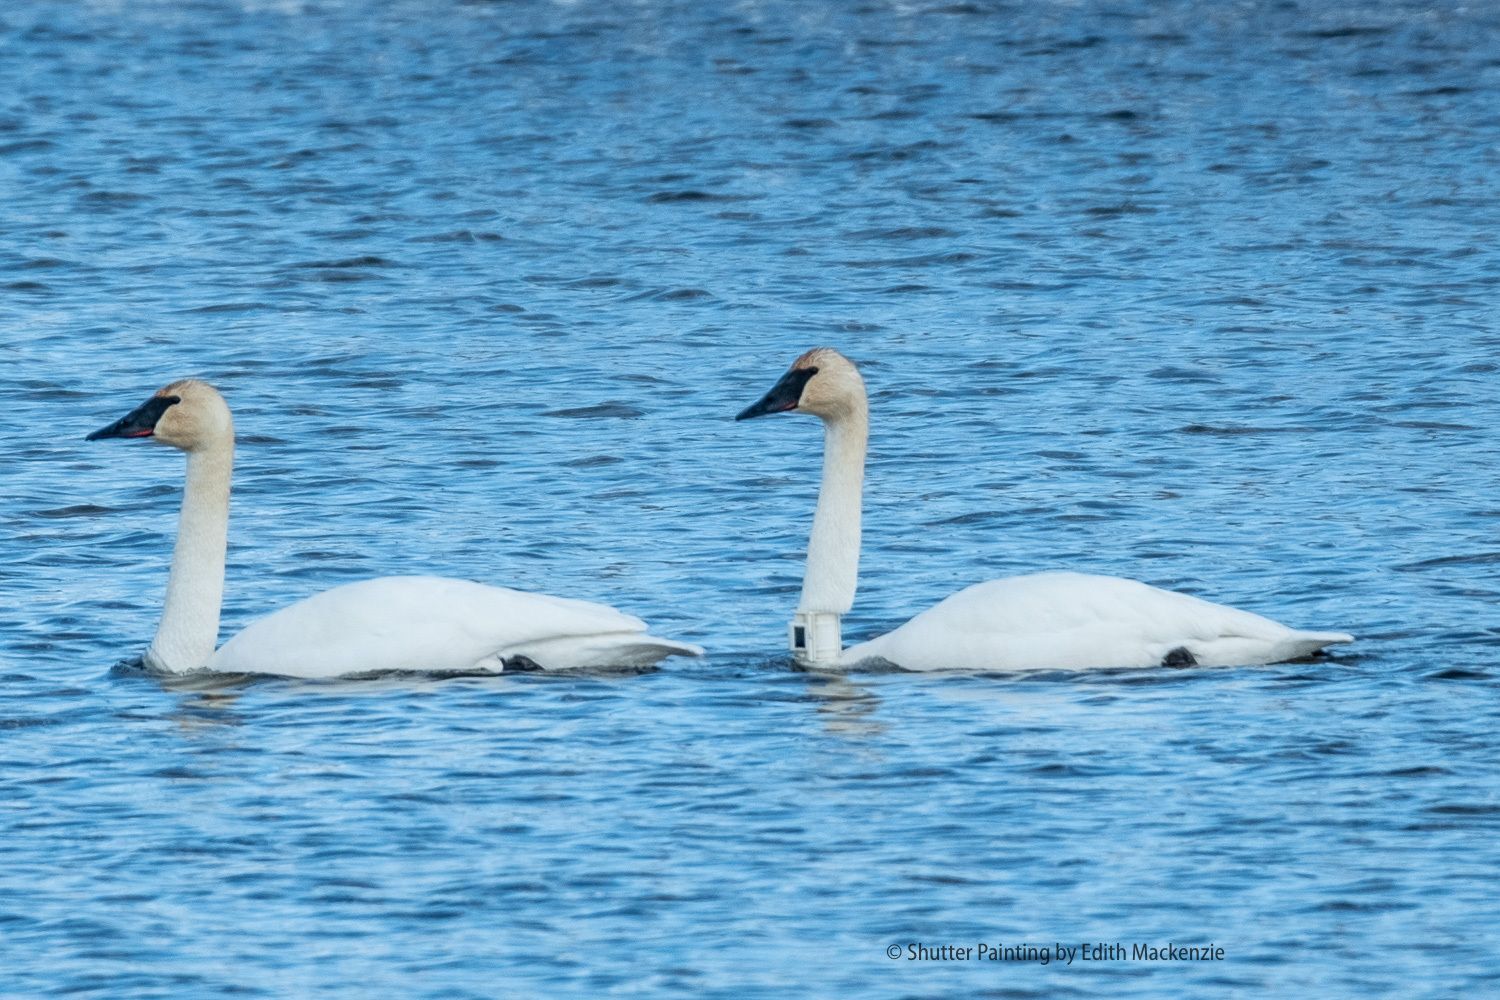 GPS/GSM swan that winters in Oregon travels in spring to Alberta